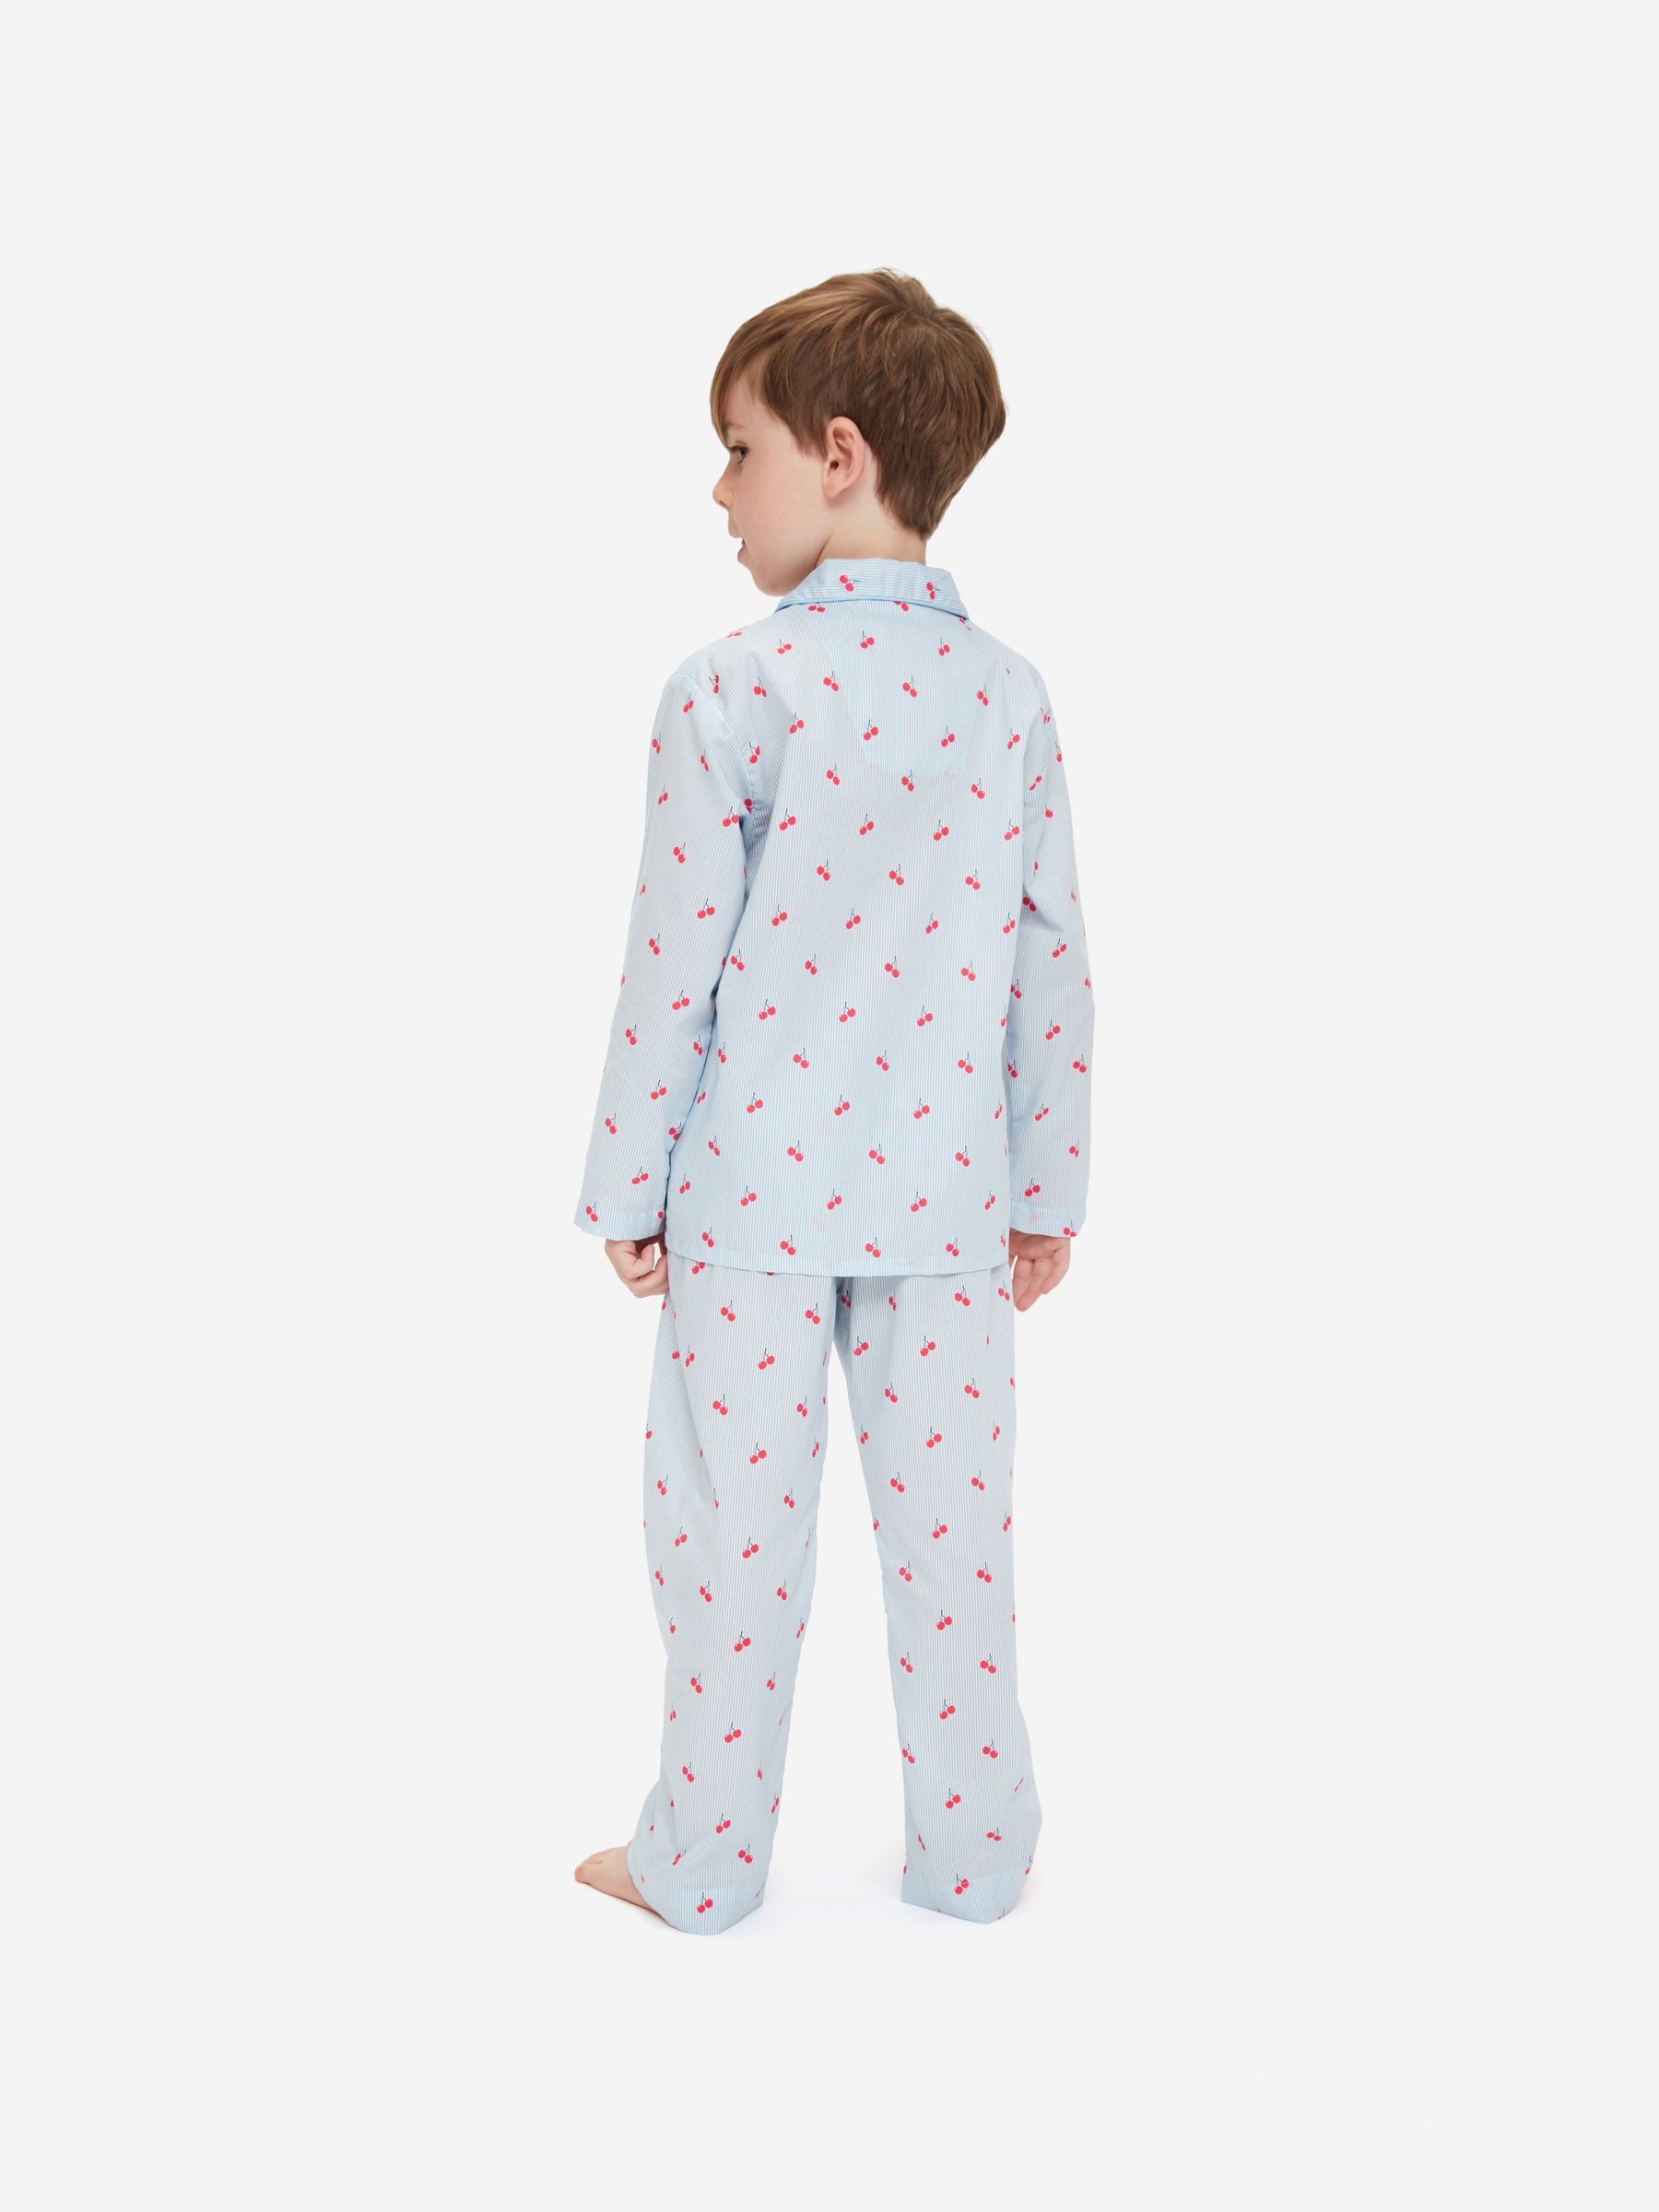 Kids' Pyjamas Nelson 84 Cotton Batiste Blue